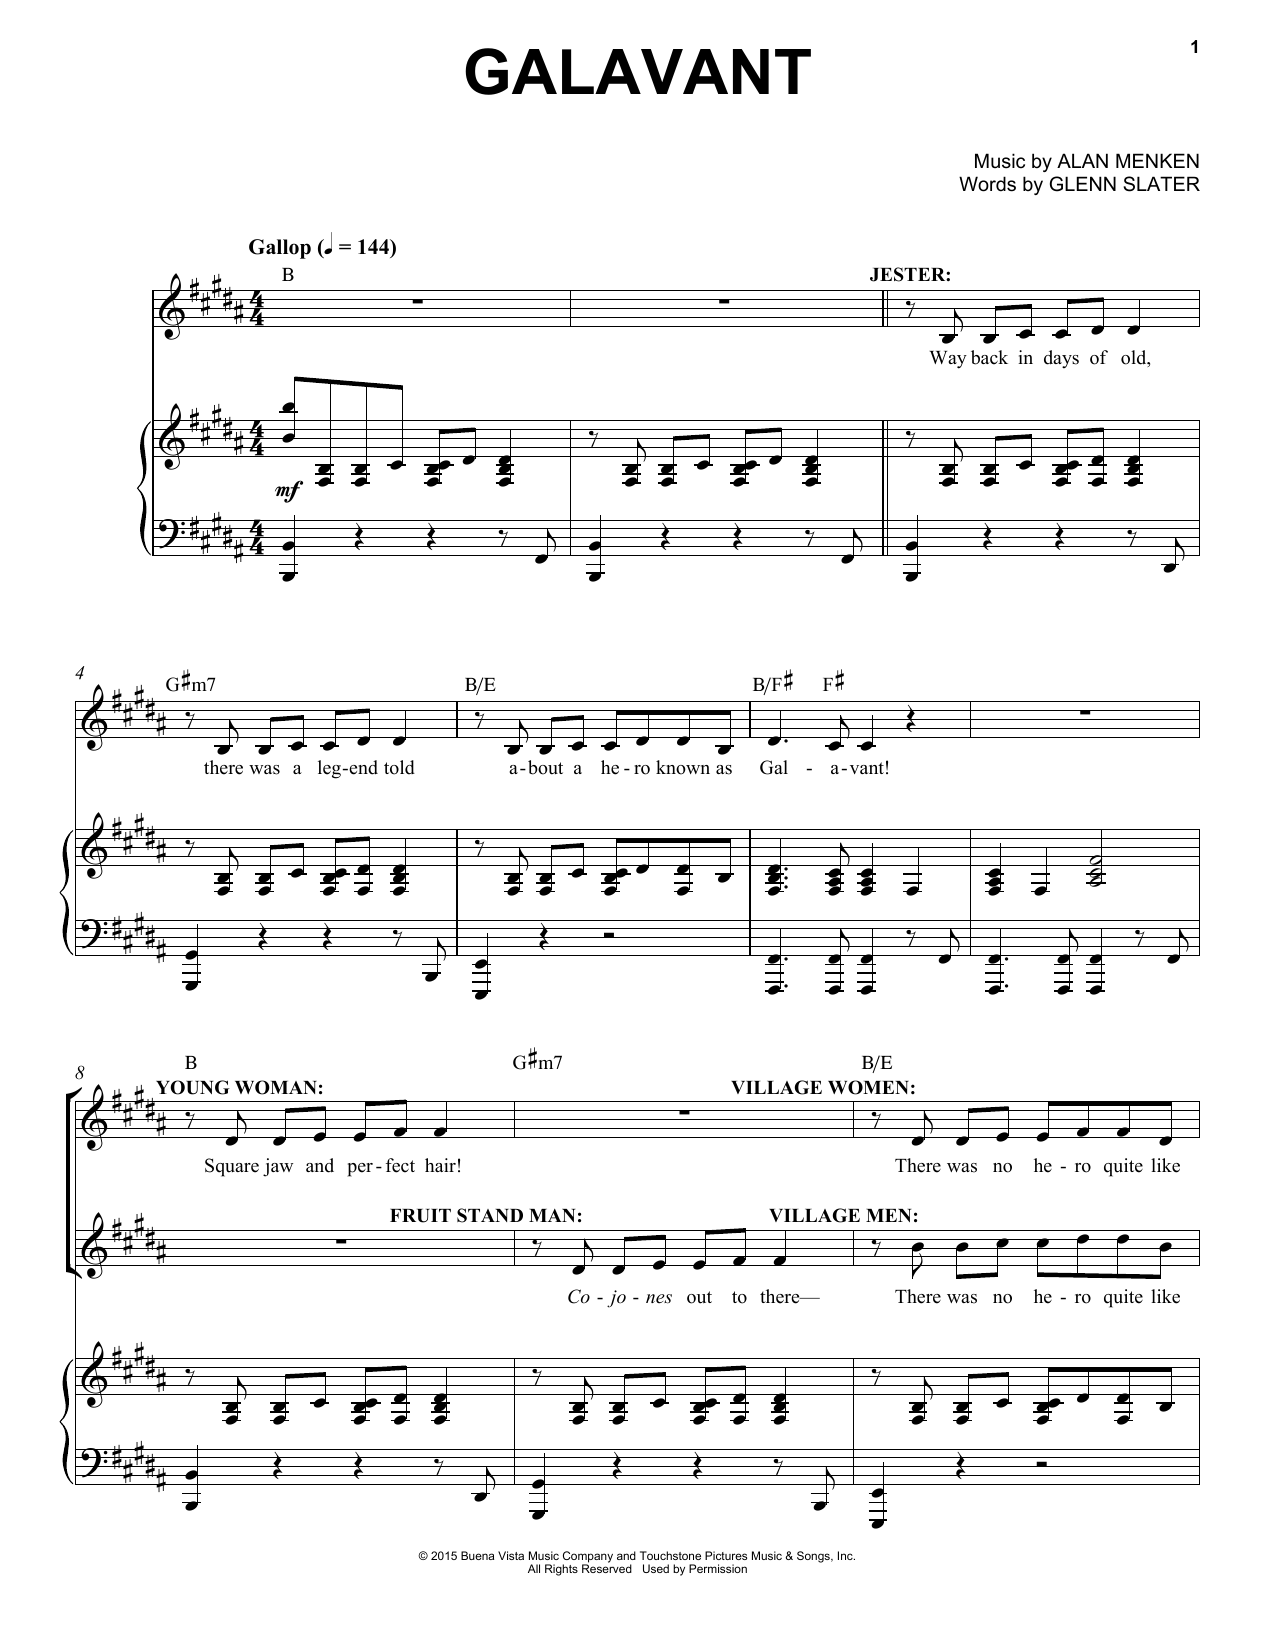 Alan Menken Galavant Sheet Music Notes & Chords for Piano & Vocal - Download or Print PDF